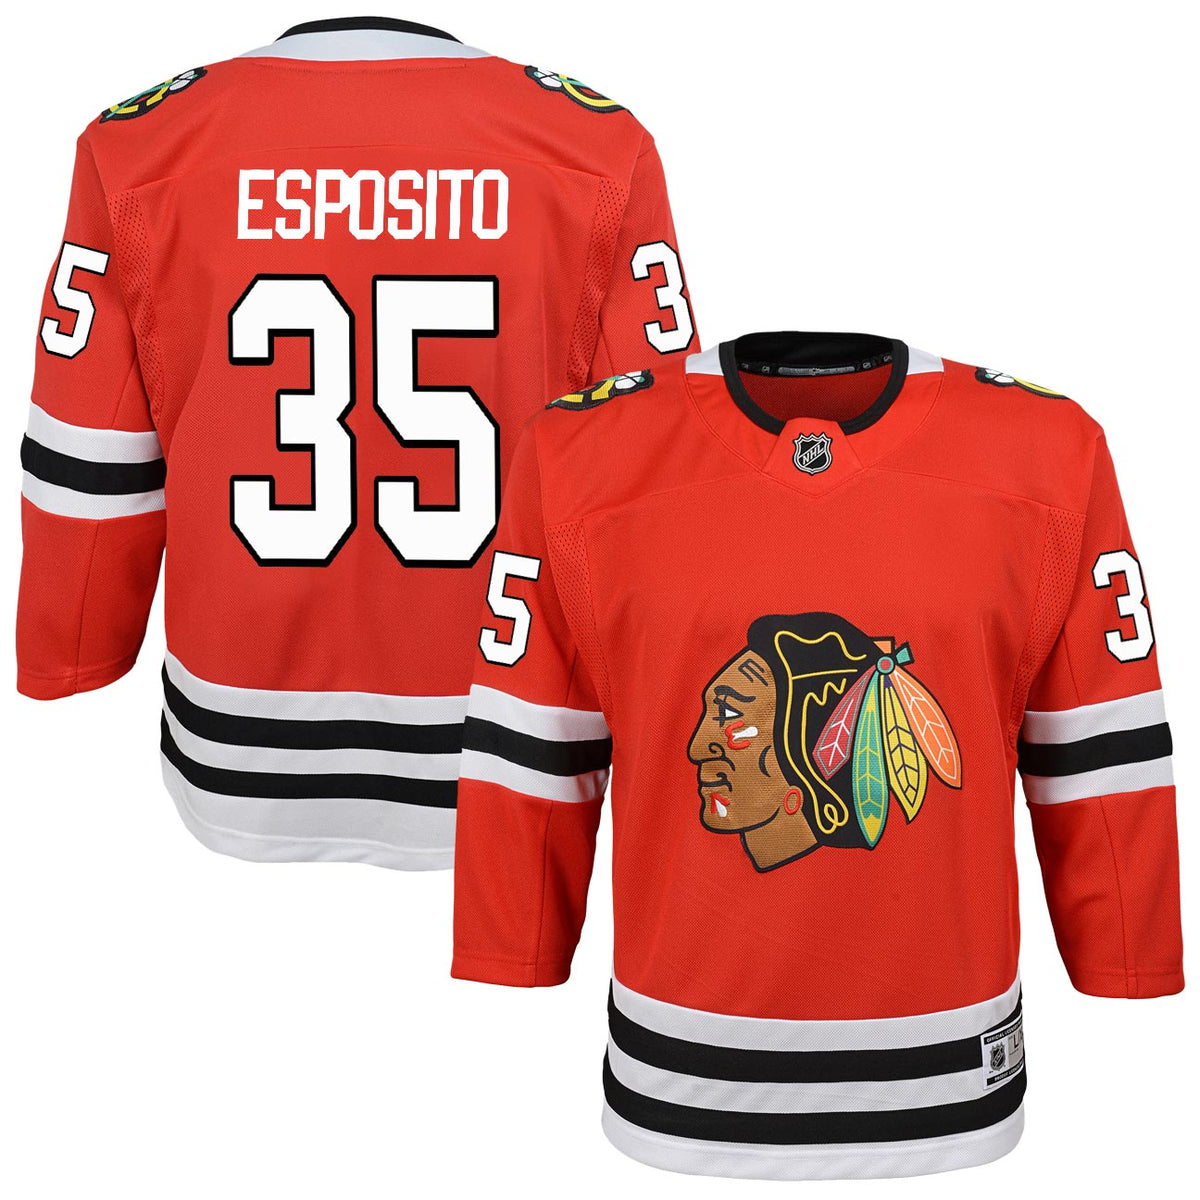 Authentic CCM Men's Tony Esposito Red Jersey - #35 Hockey Chicago Blackhawks  New Throwback Size Small/46